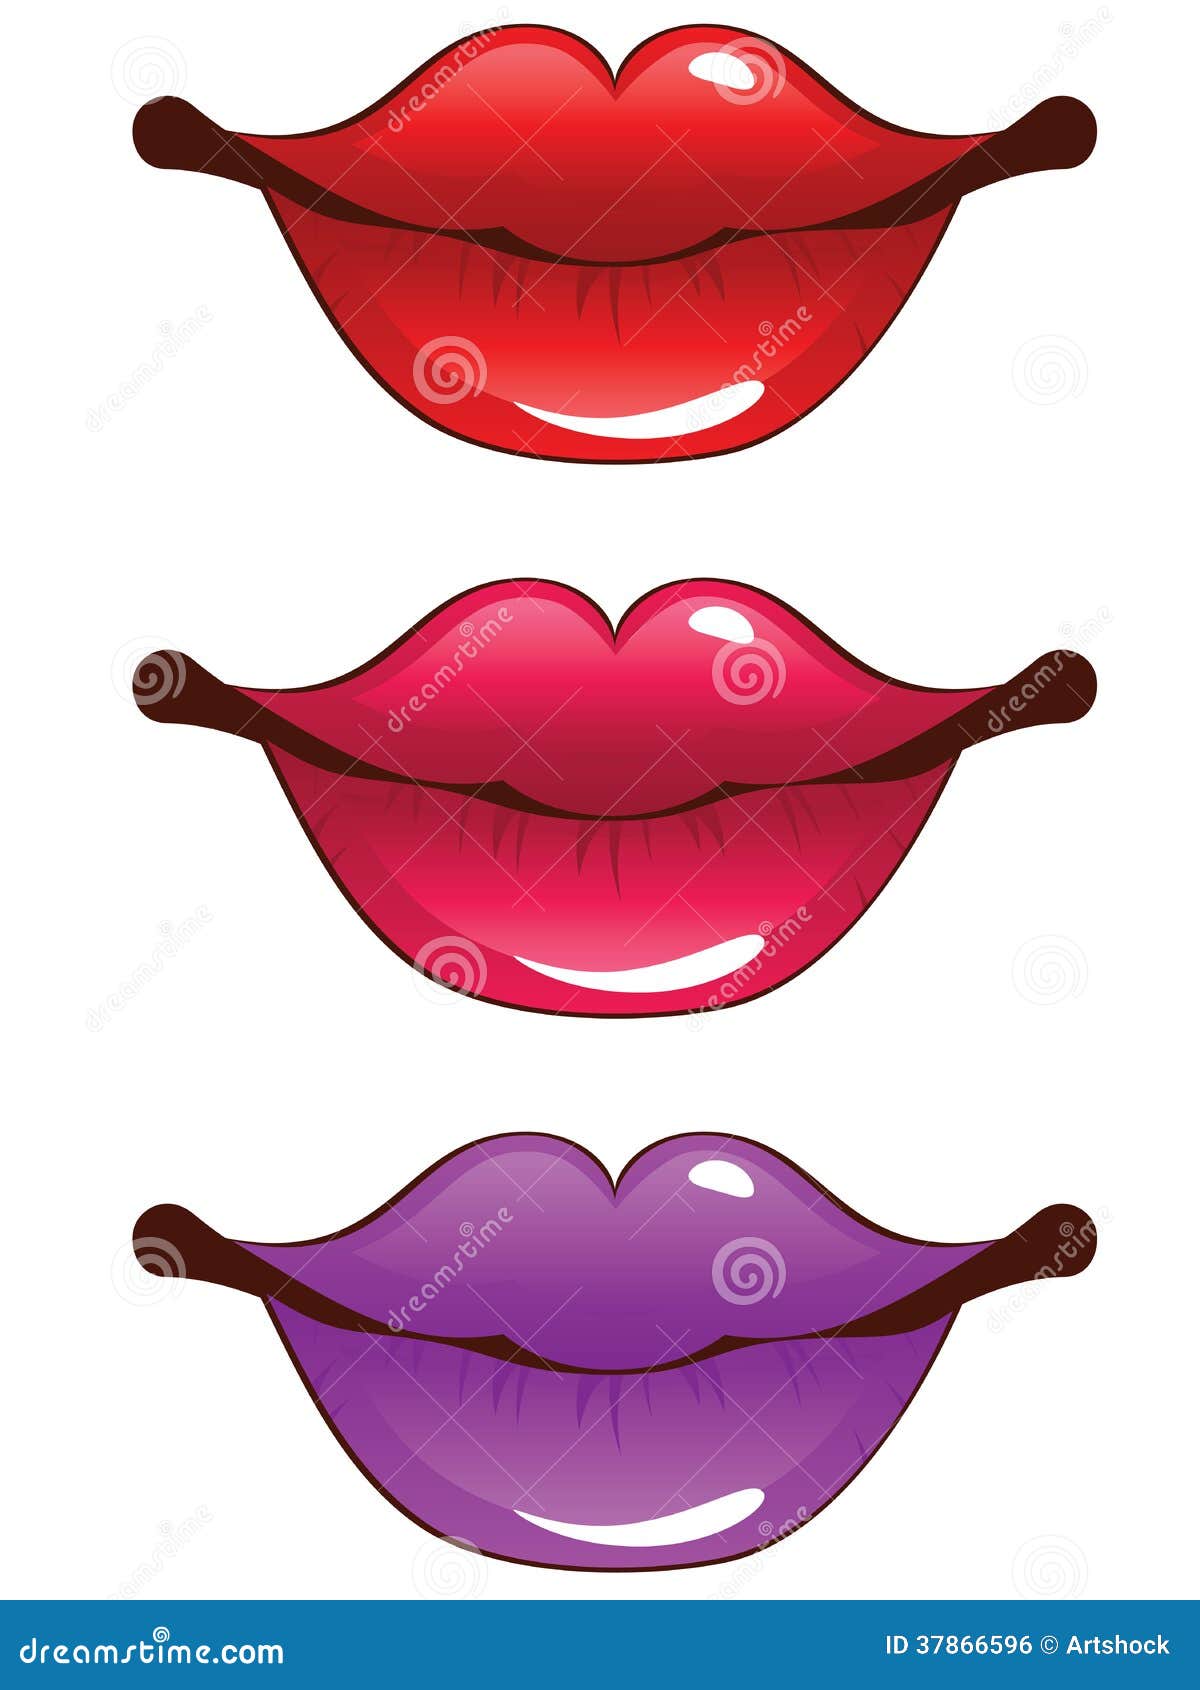 Cartoon lips stock vector. Illustration of object, background - 37866596